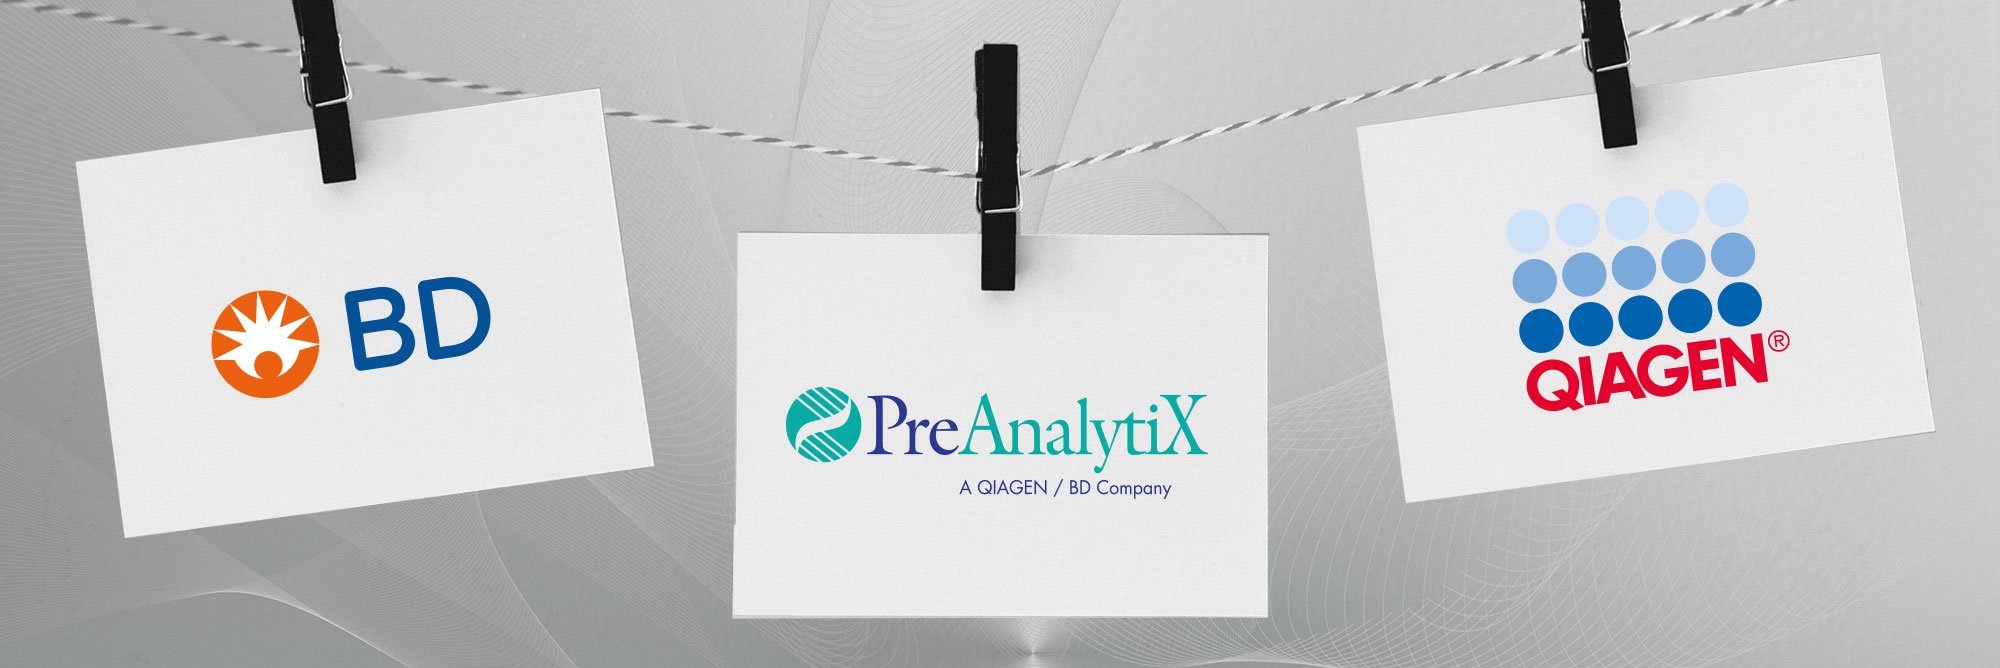 BD, PreAnalytiX, QIAGEN logos